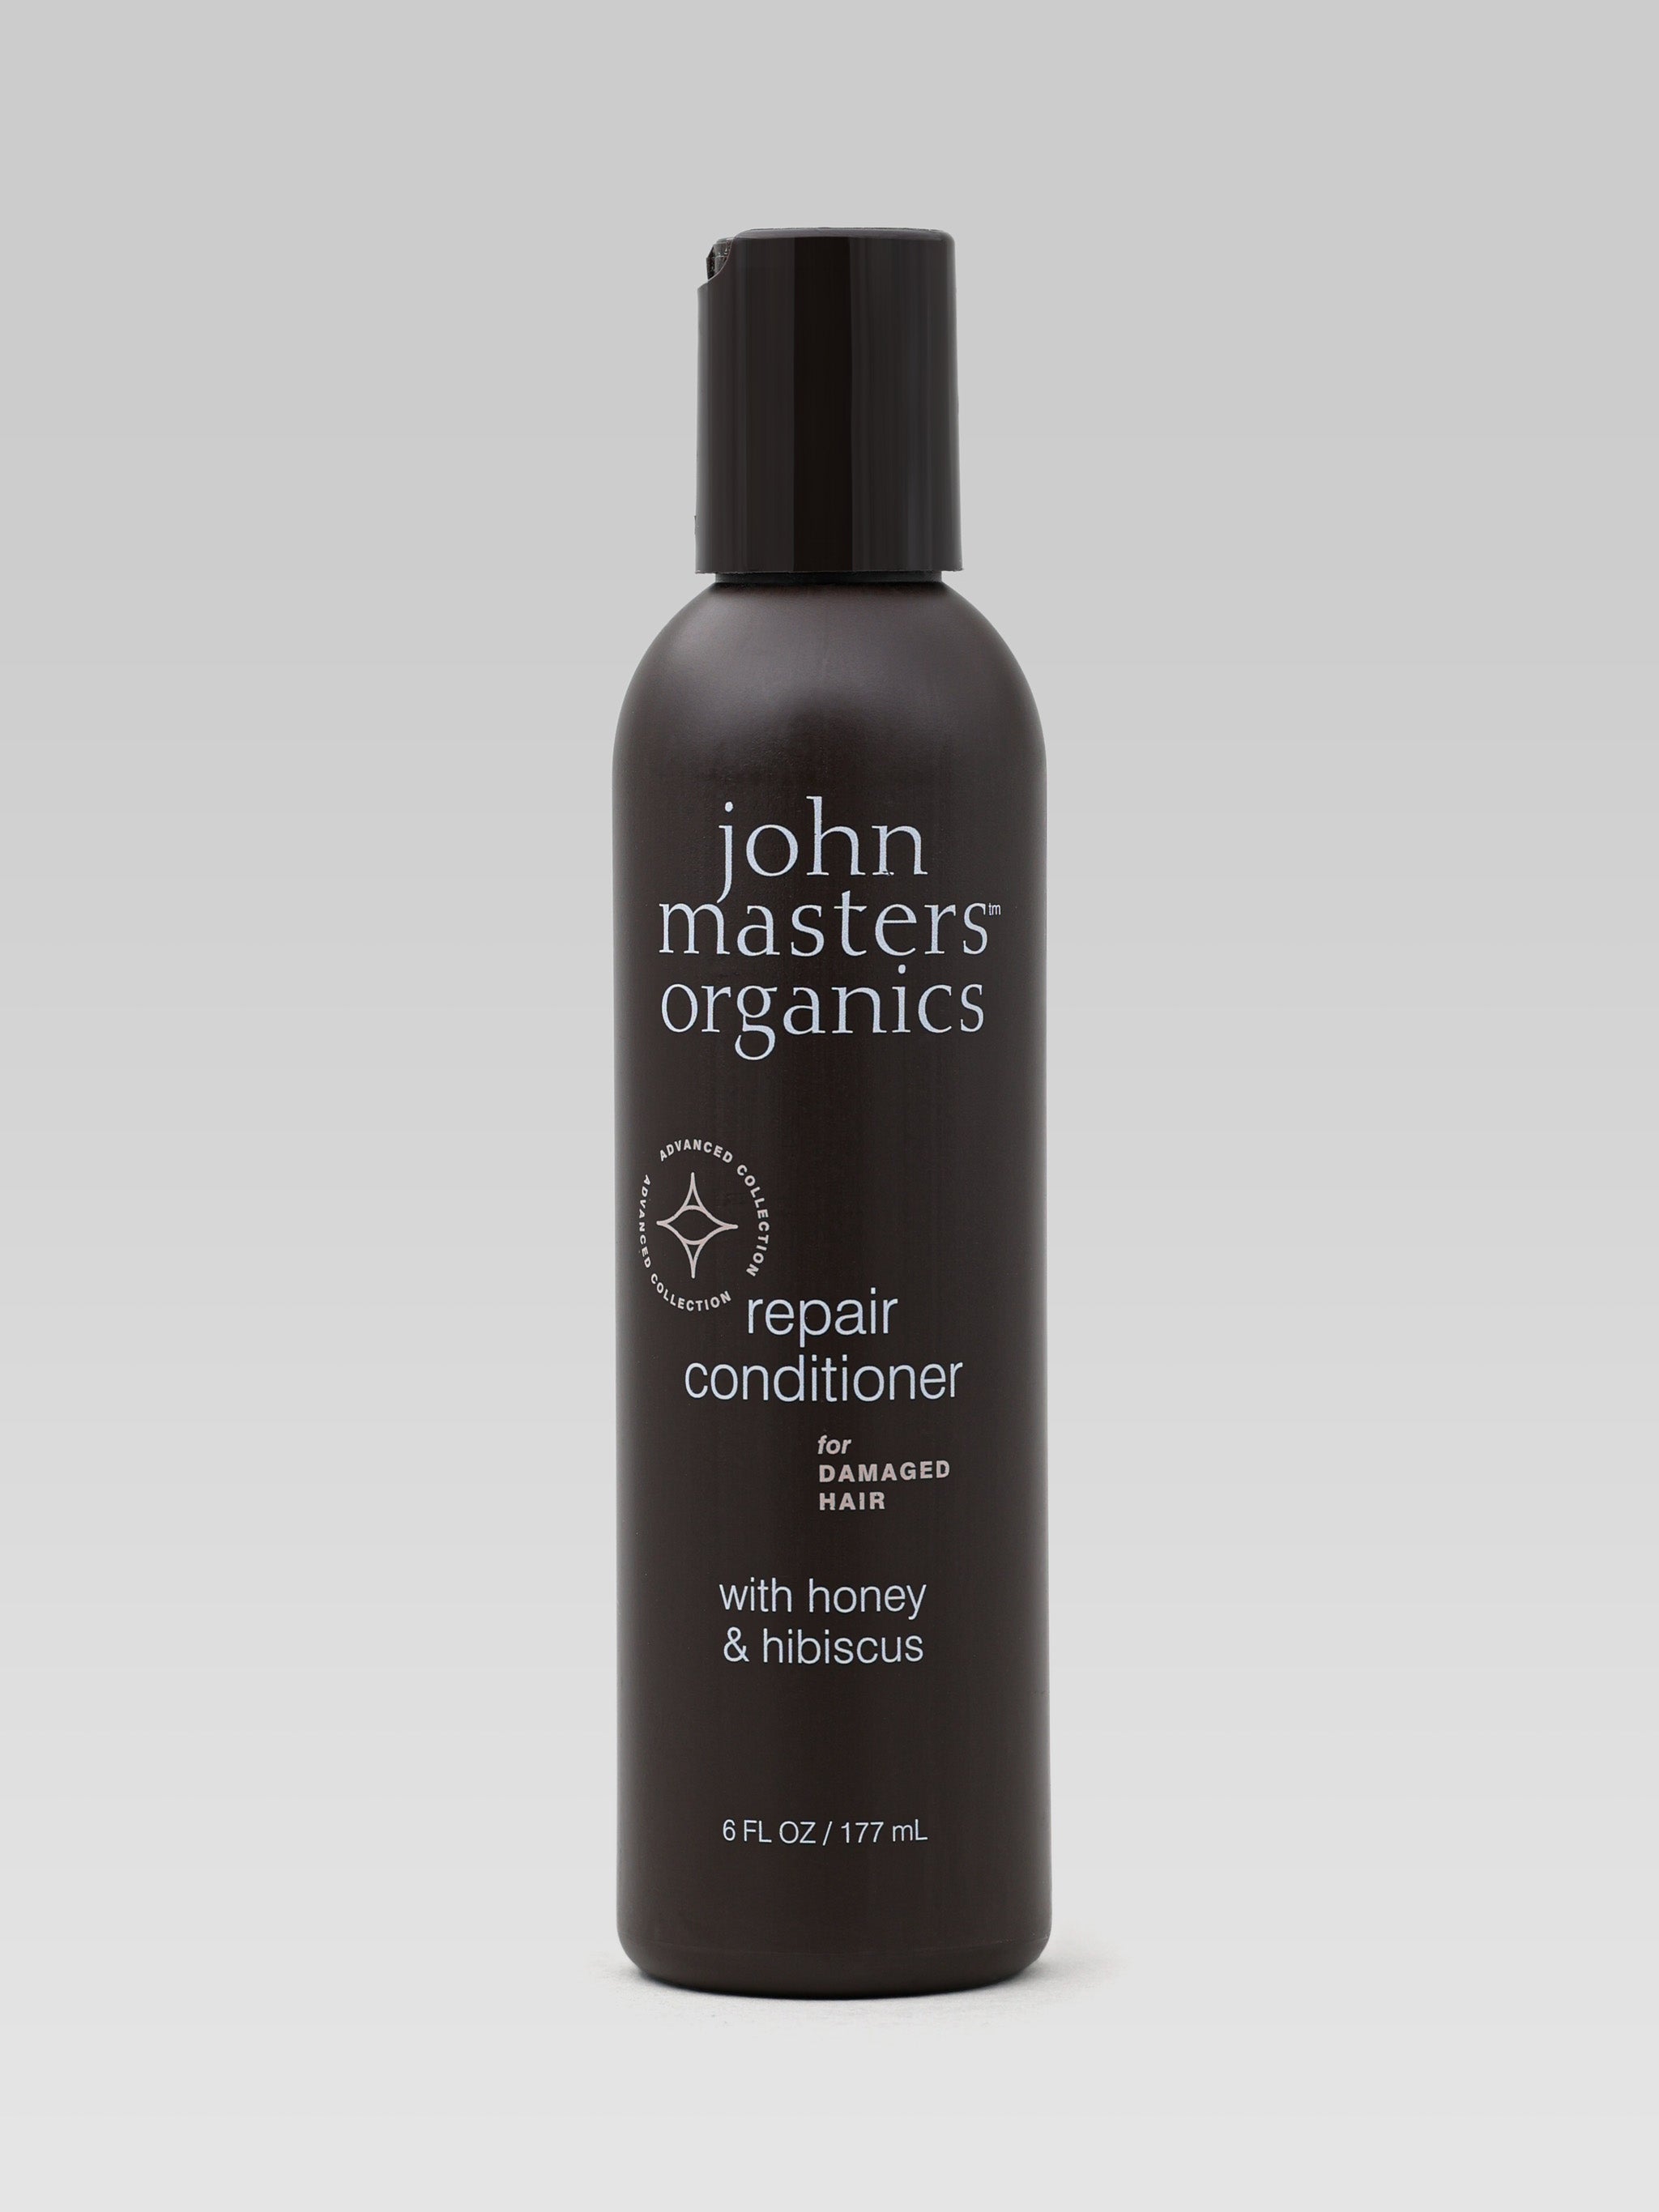 JOHN MASTERS ORGANICS Repair Conditioner for Damaged Hair